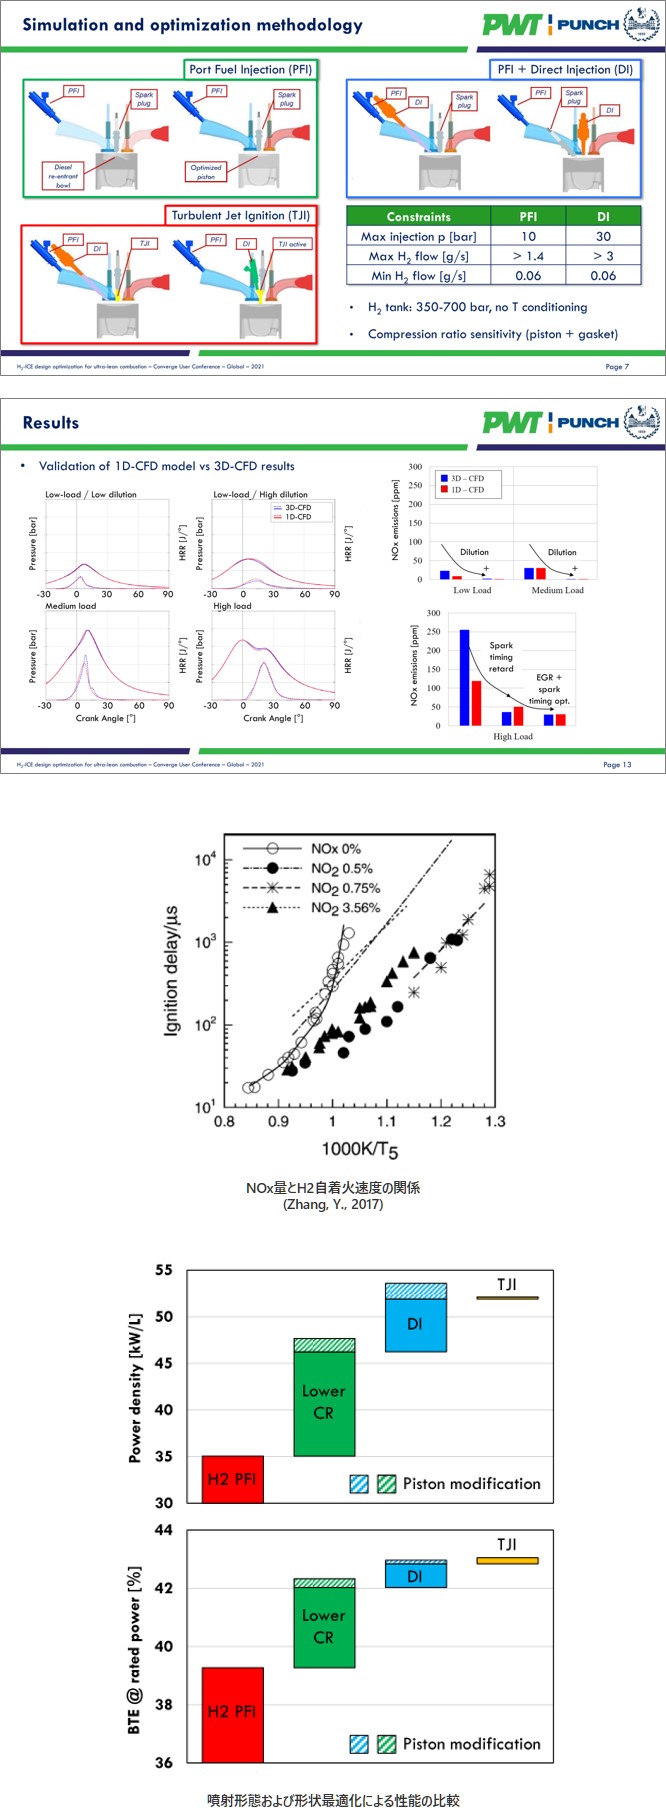 NOx量とH2自着火速度の関係の図、噴射形態および形状最適化による性能の比較
の図